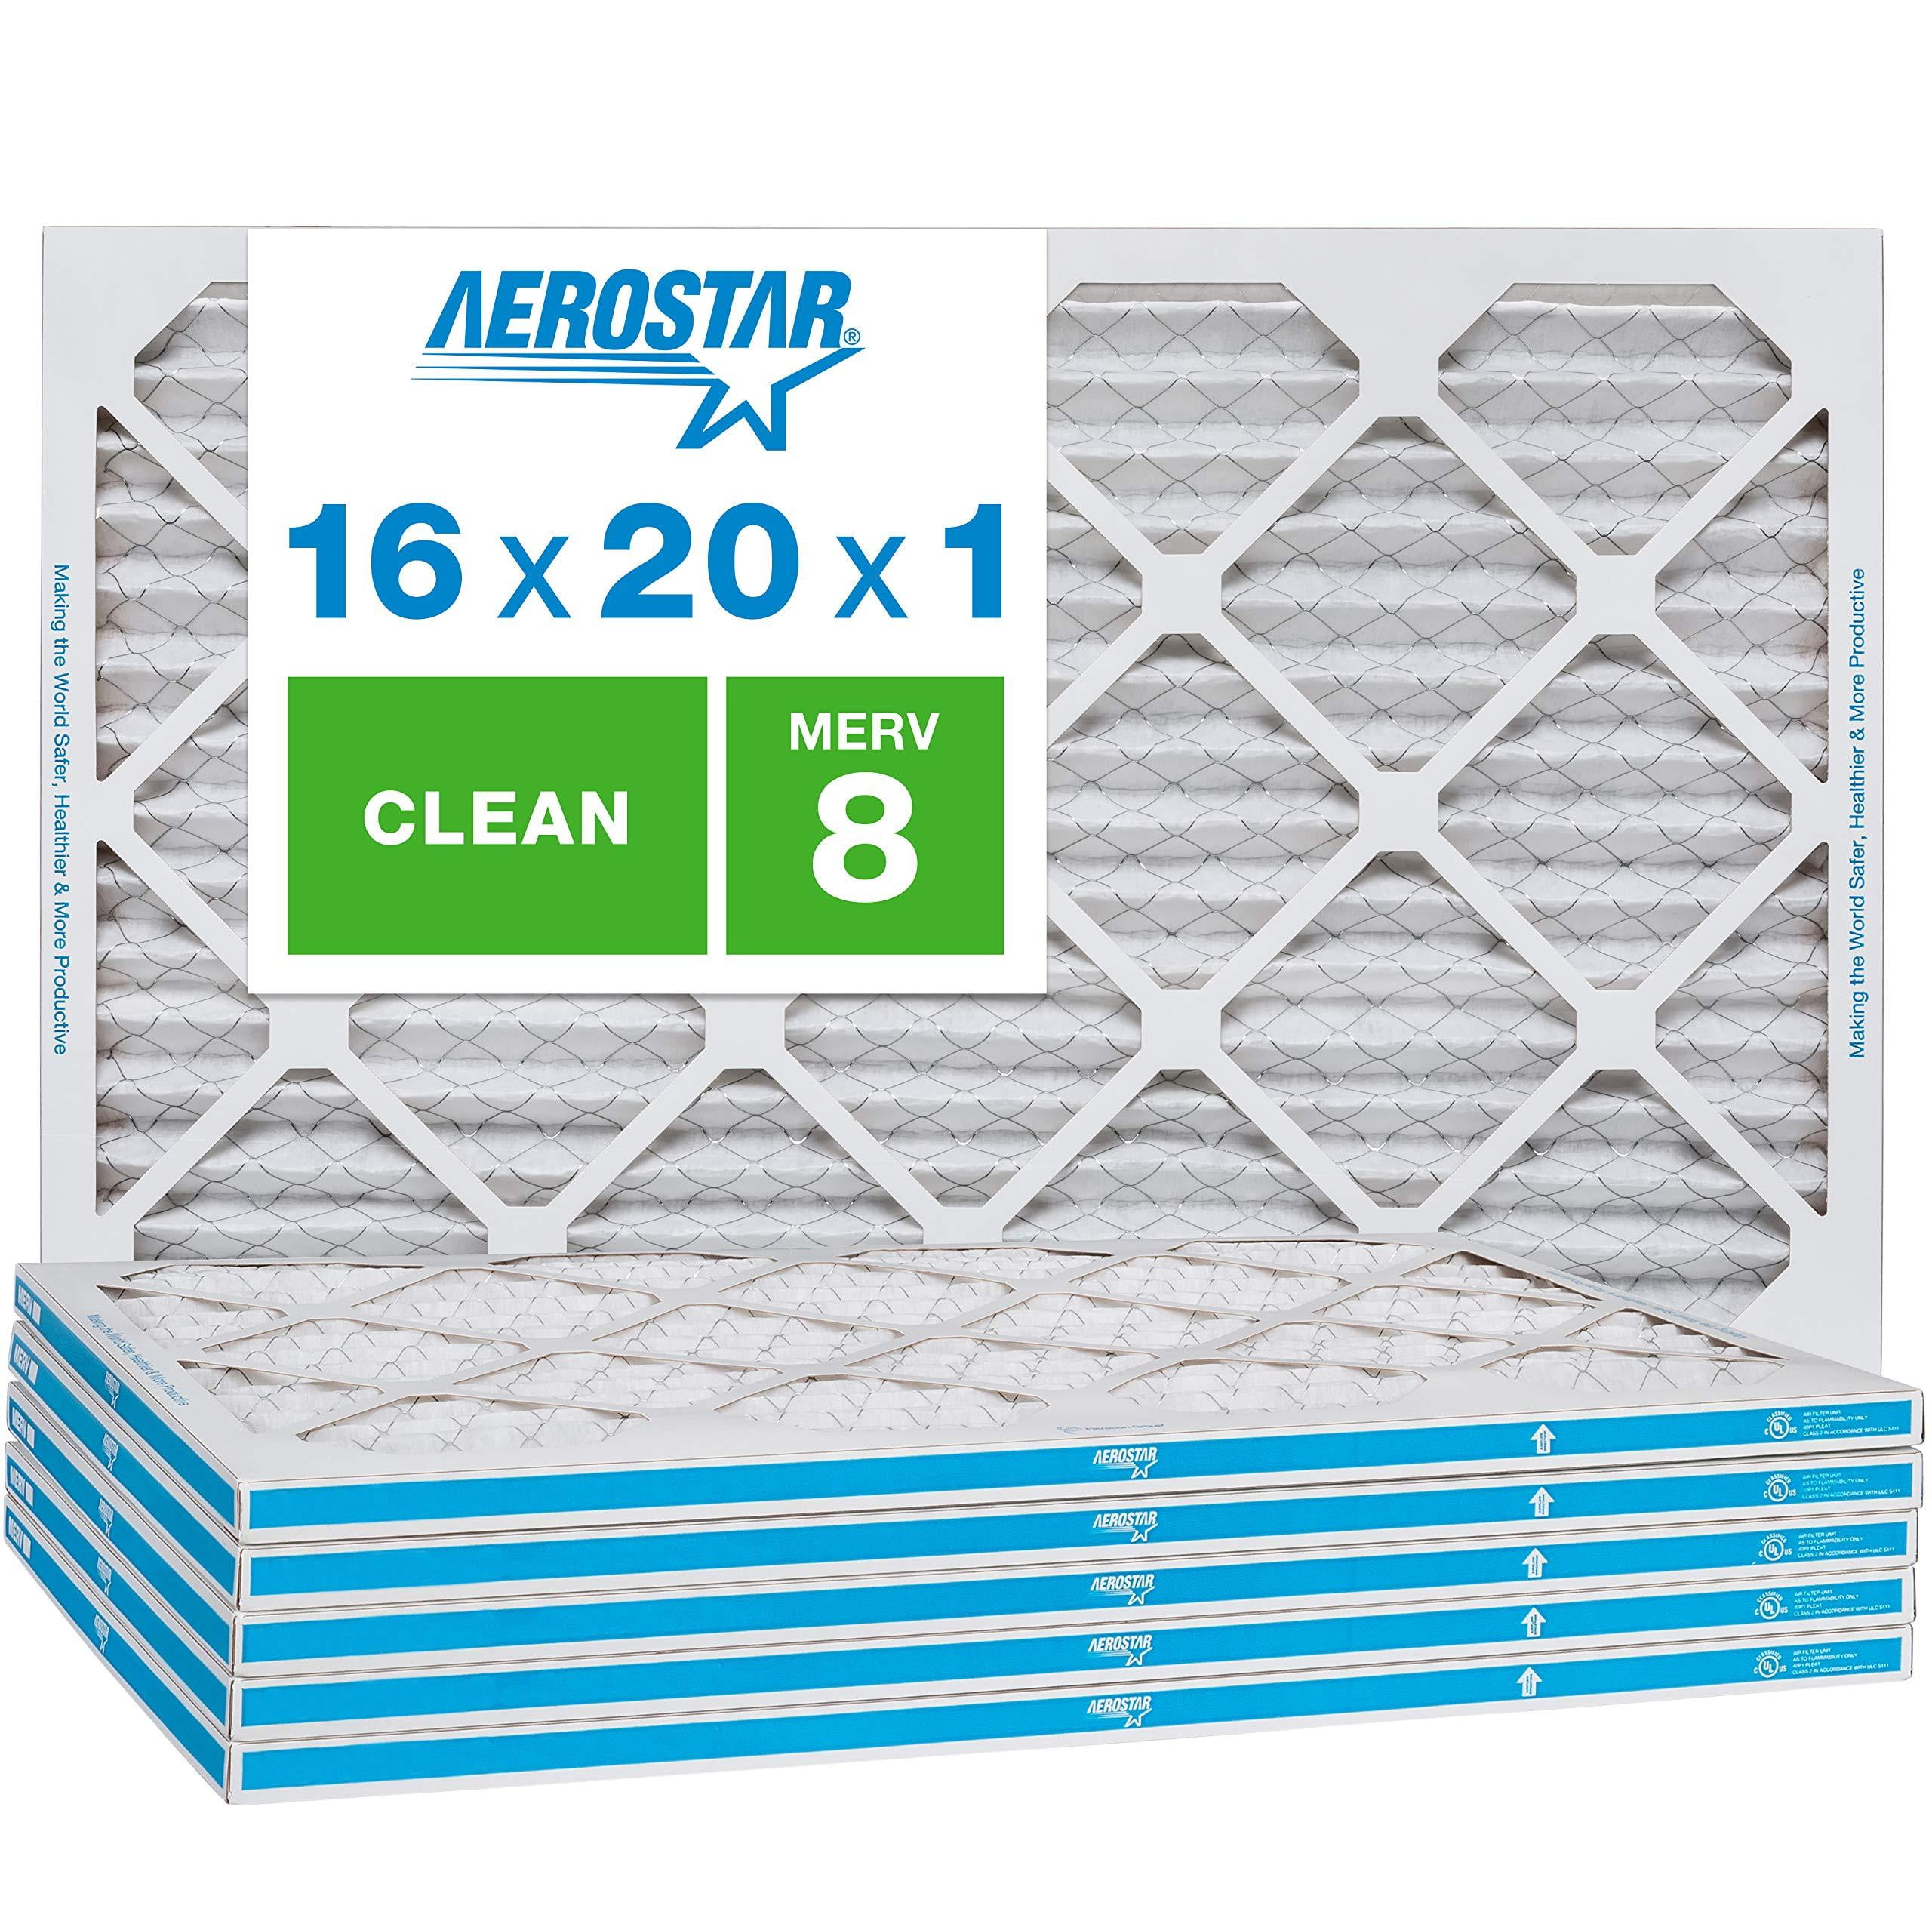 25x25x1 MERV 13 Pleated AC Furnace Air Filters 6 Pack 